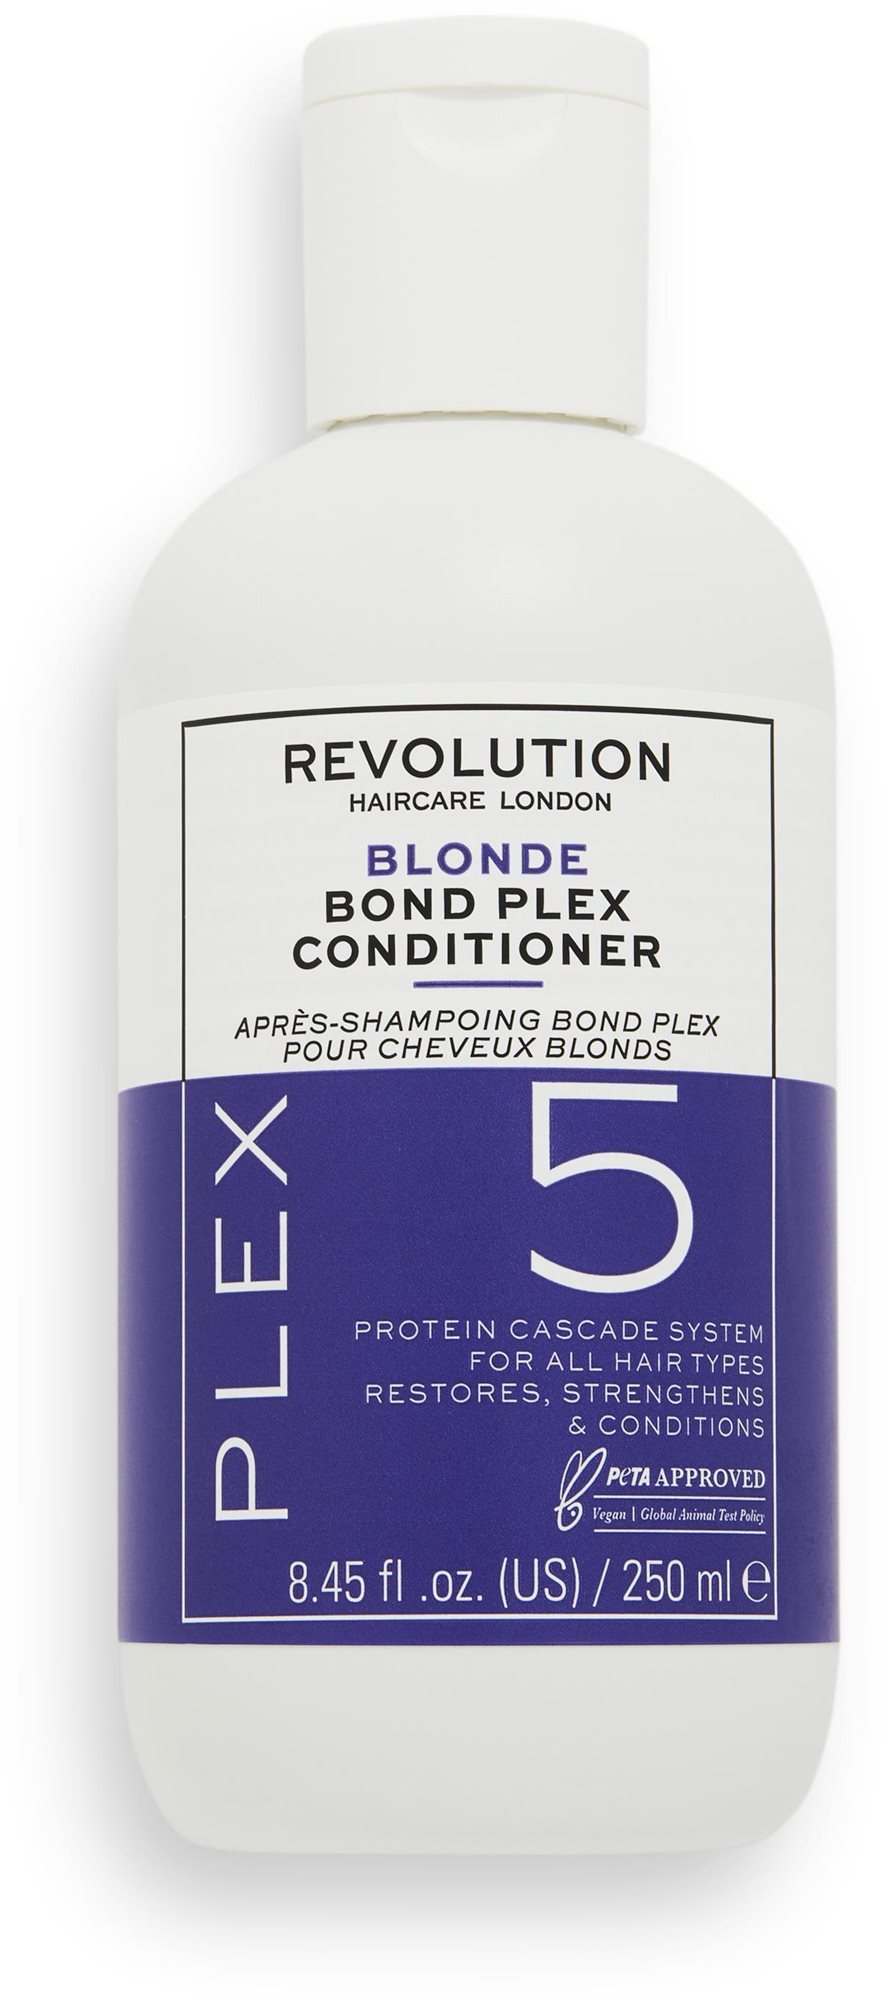 REVOLUTION HAIRCARE Blonde Plex 5 Bond Plex Conditioner 250 ml